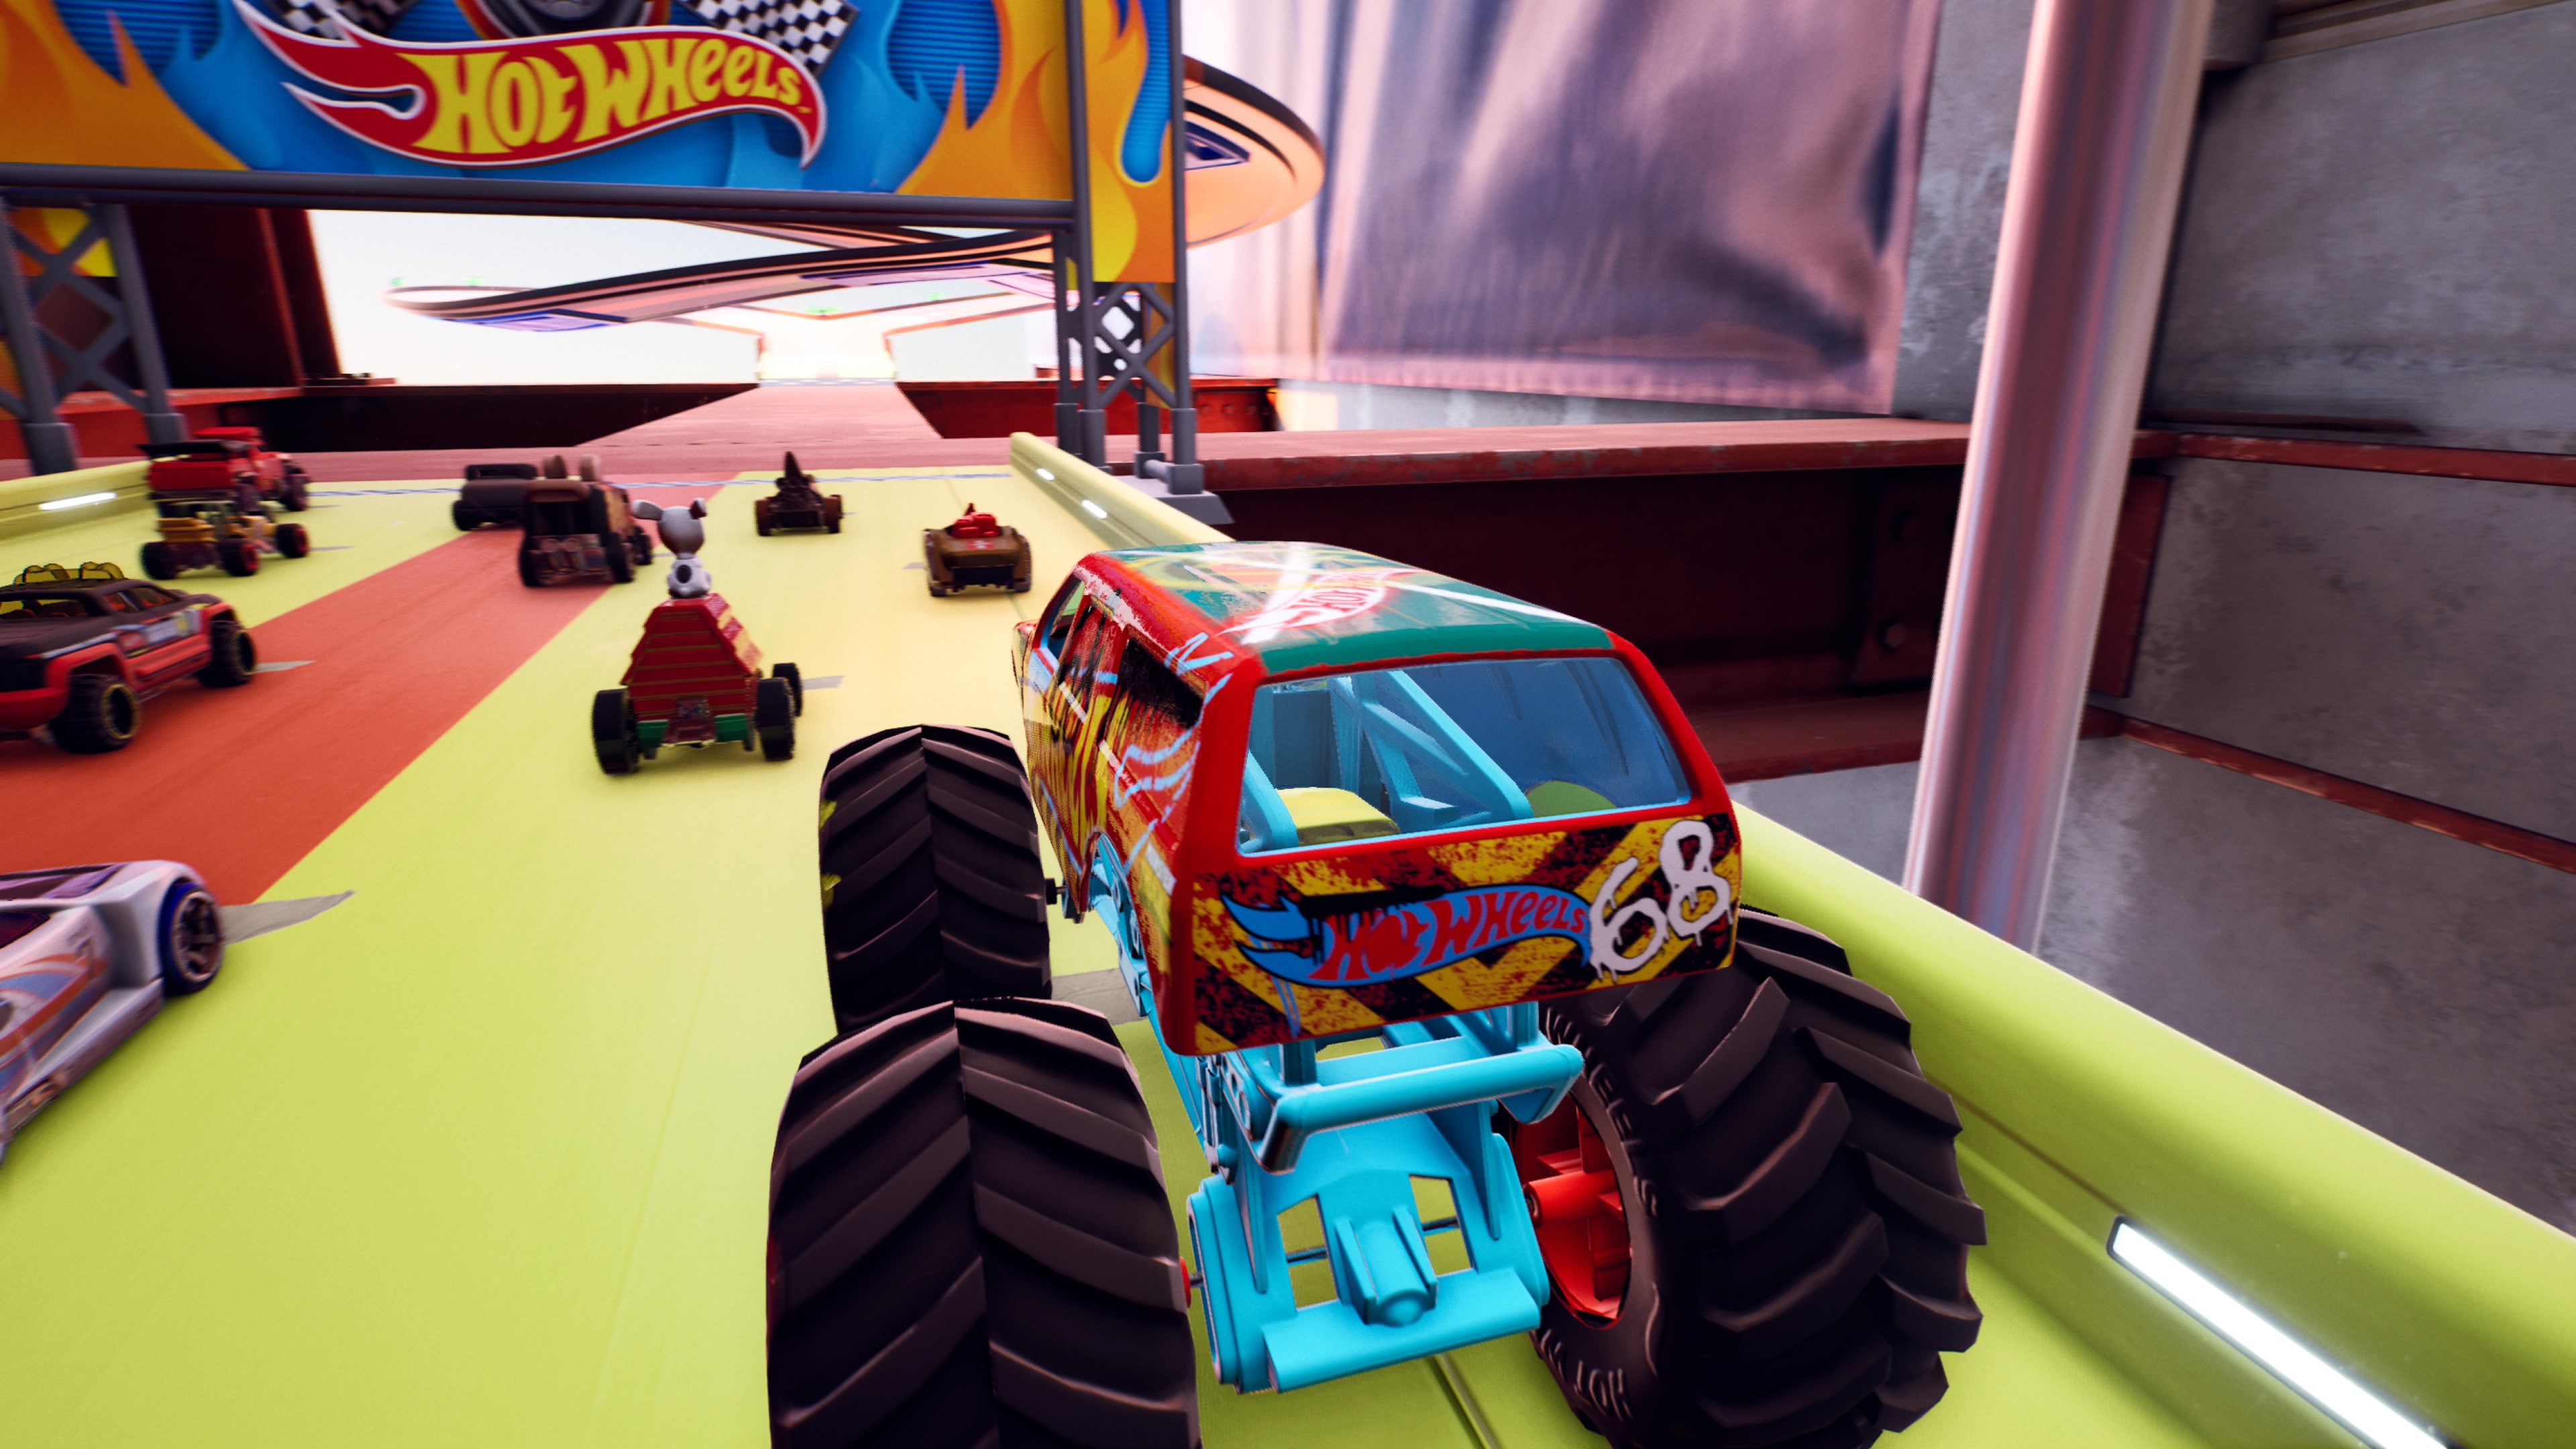 Hot Wheels Unleashed™ - Monster Trucks Expansion 